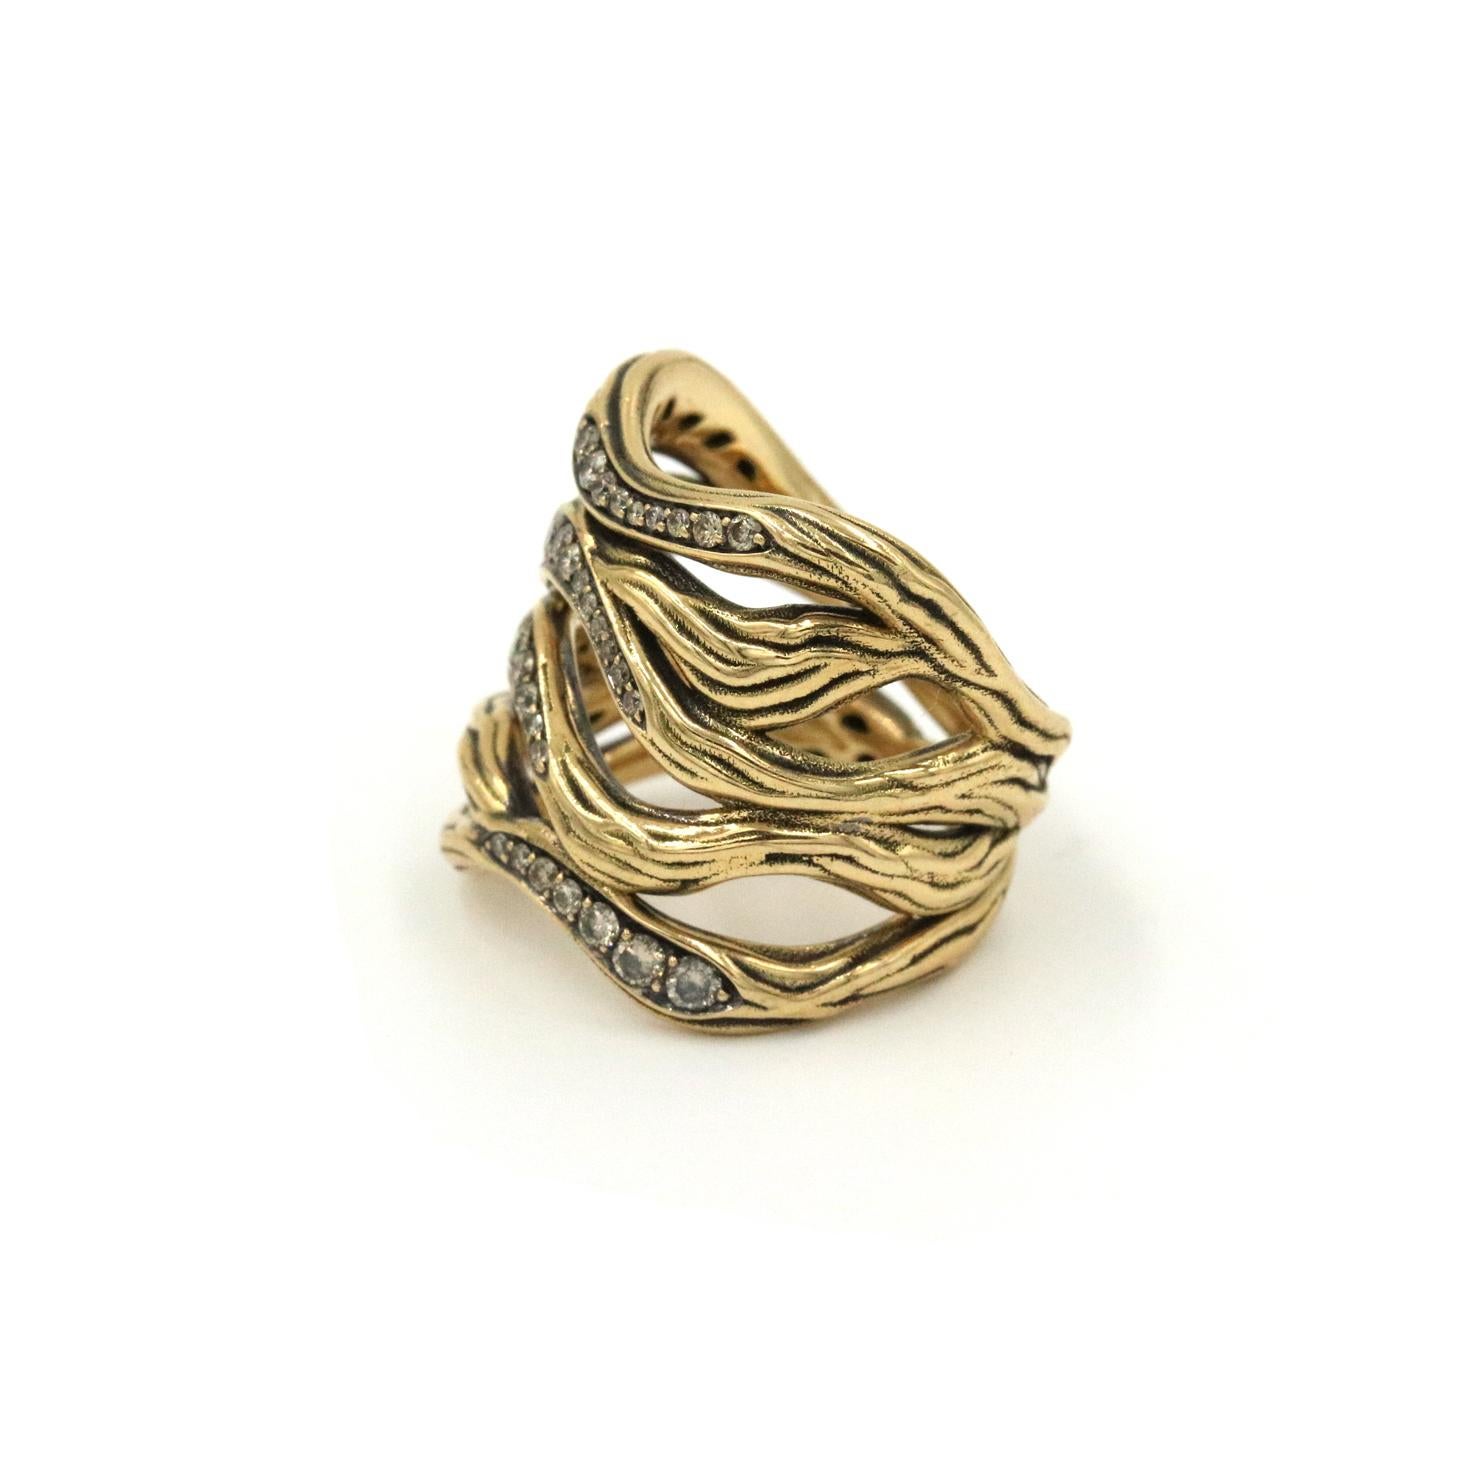 Antonini Vulcano Diamond Fashion Ring With 4 Rows Of Champagne Diamonds Set In Black Rhodium And 18K Yellow Gold.